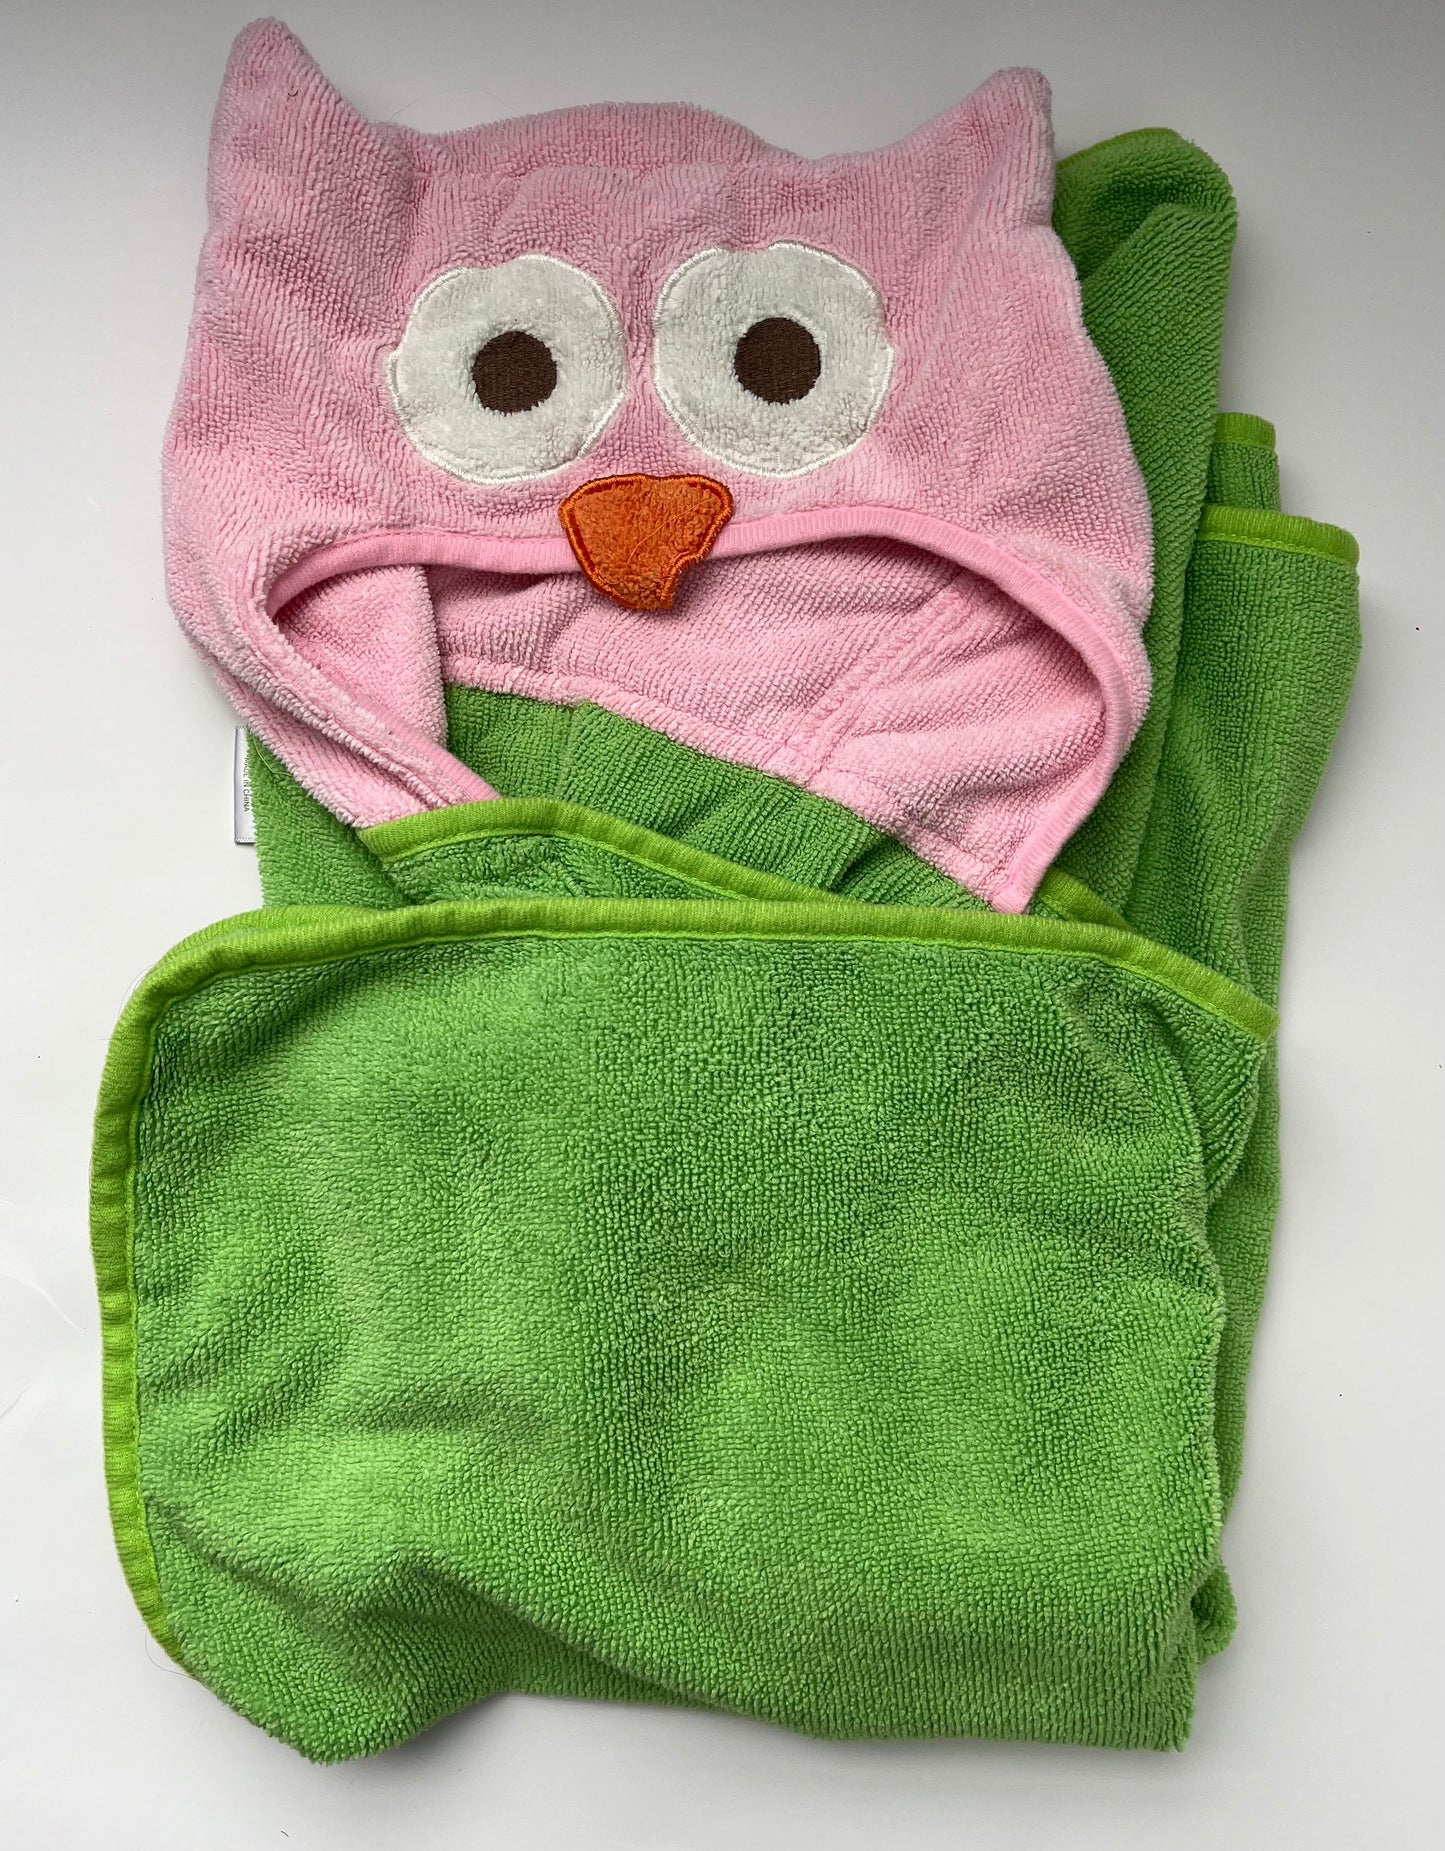 Owl hooded bath towel (45244)